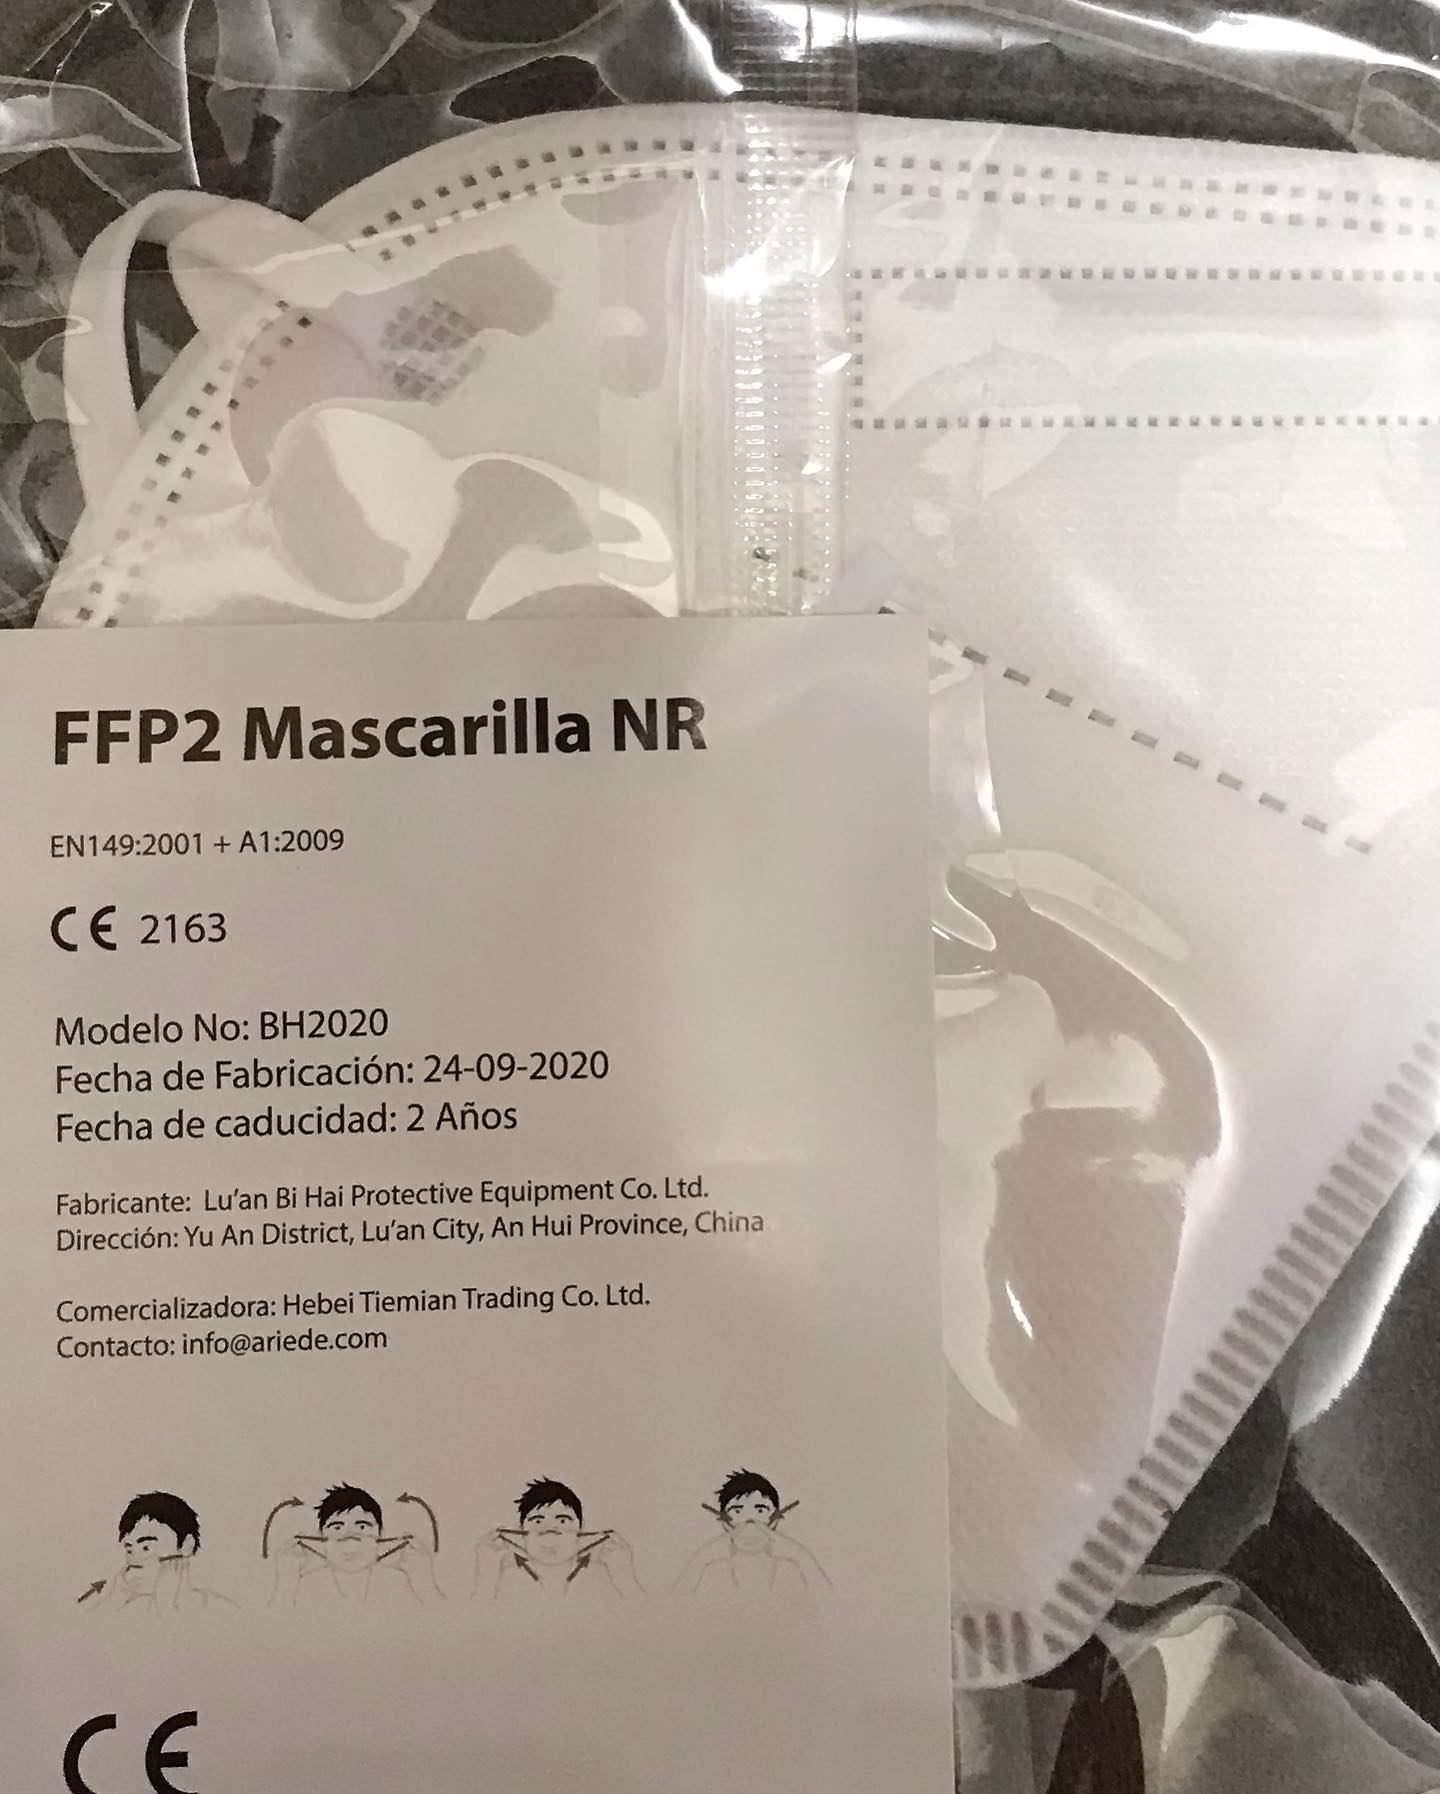 1 Mascarilla FFP2